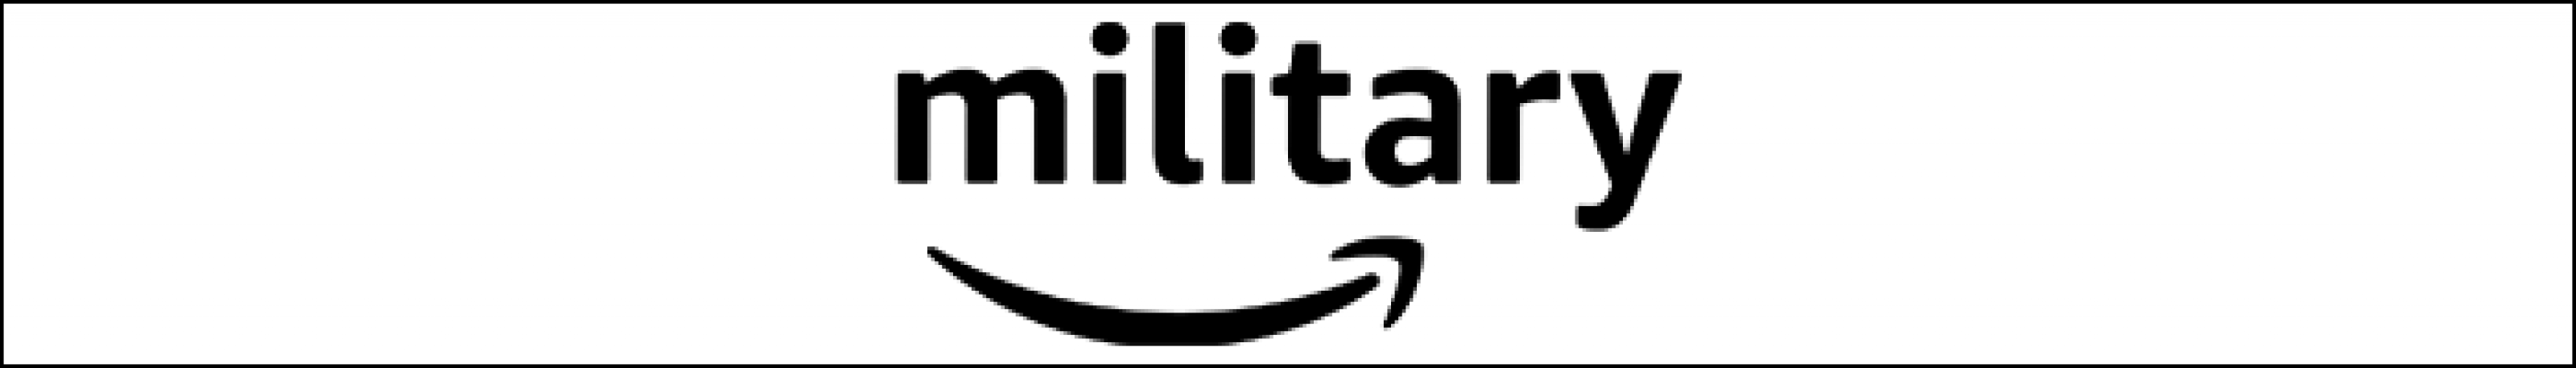 Amazon Military Sponsor Ad 2020 Vets Conf